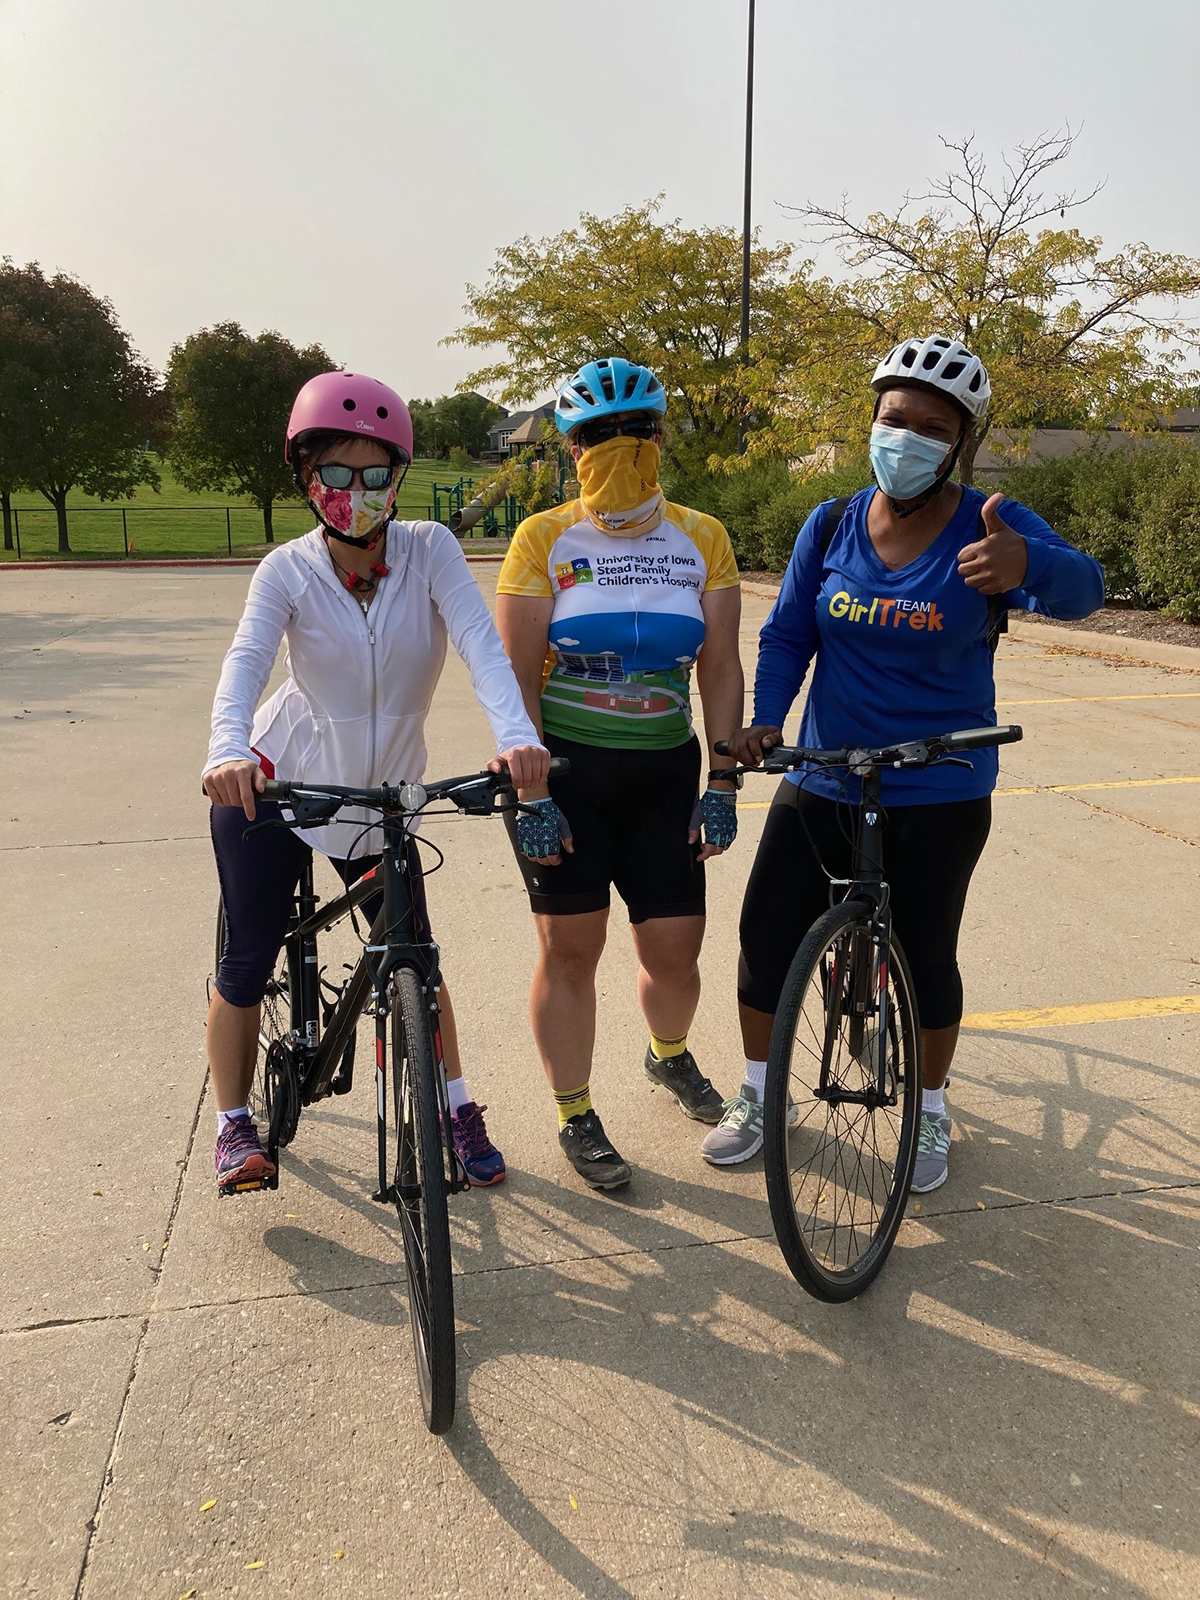 Three fellows biking safely wearing masks during the pandemic